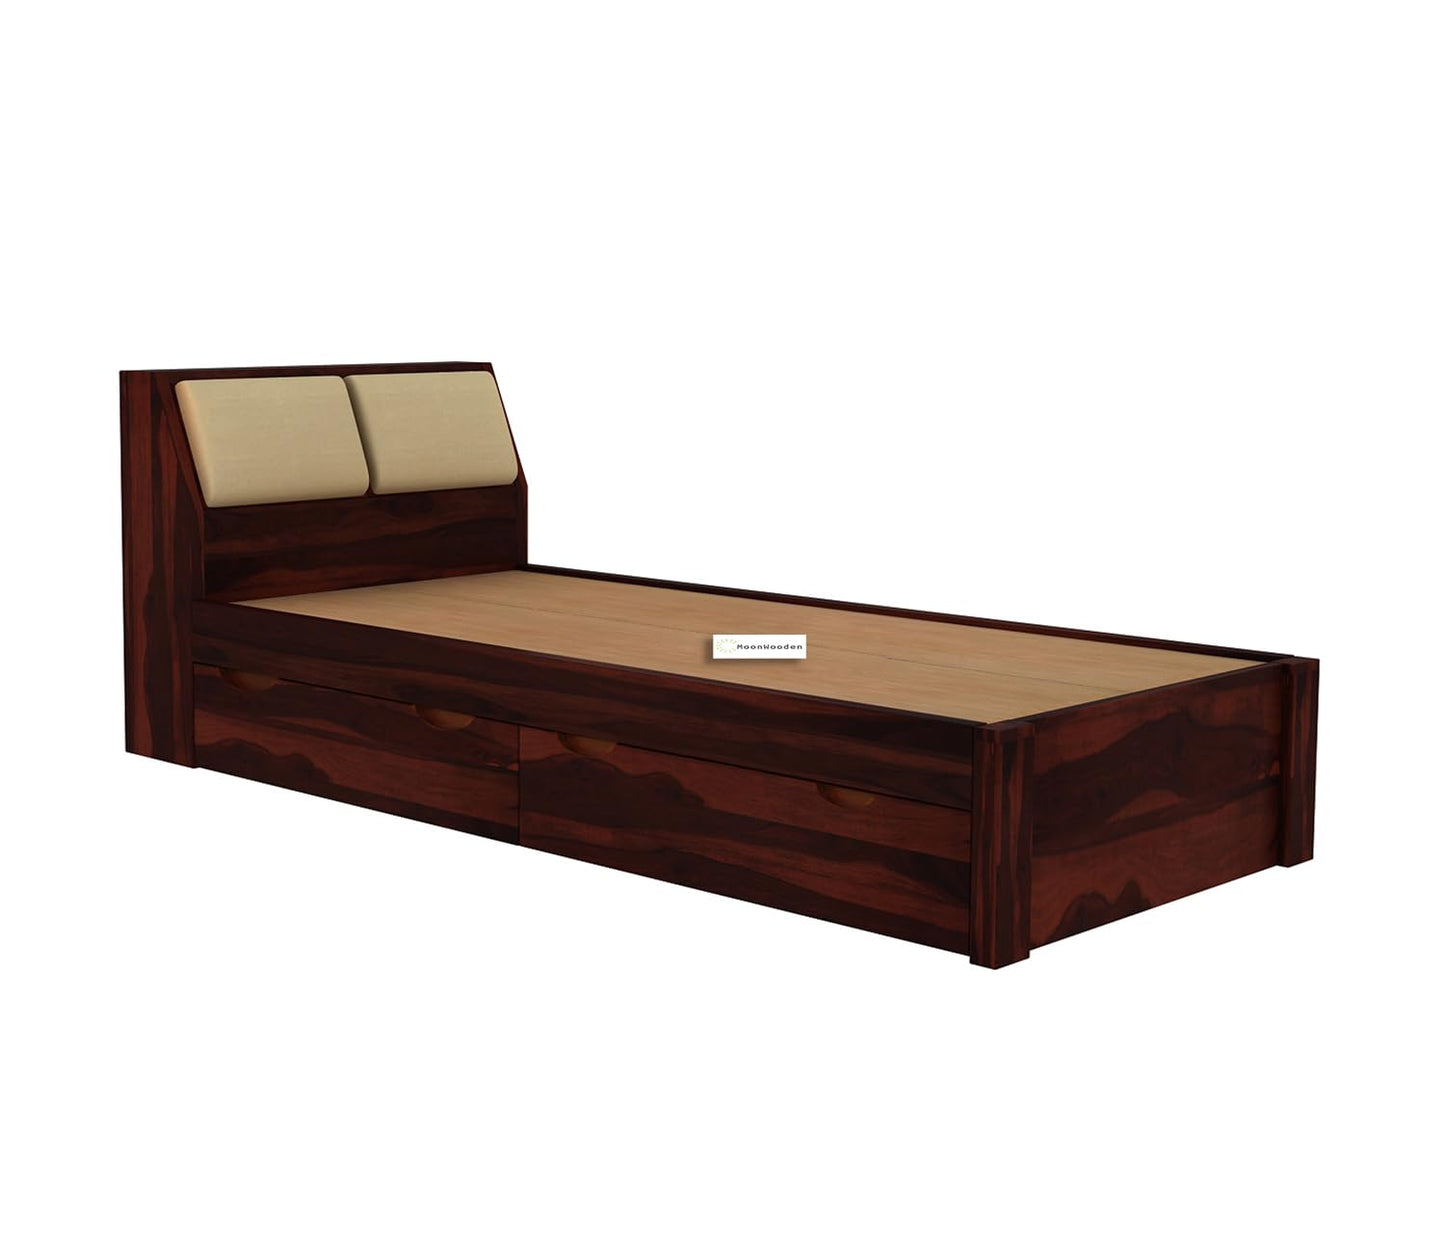 MoonWooden Solid Sheesham Wood Single Bed with Drawer Storage - Elegant and Functional Bedroom Furniture (Walnut Finish)